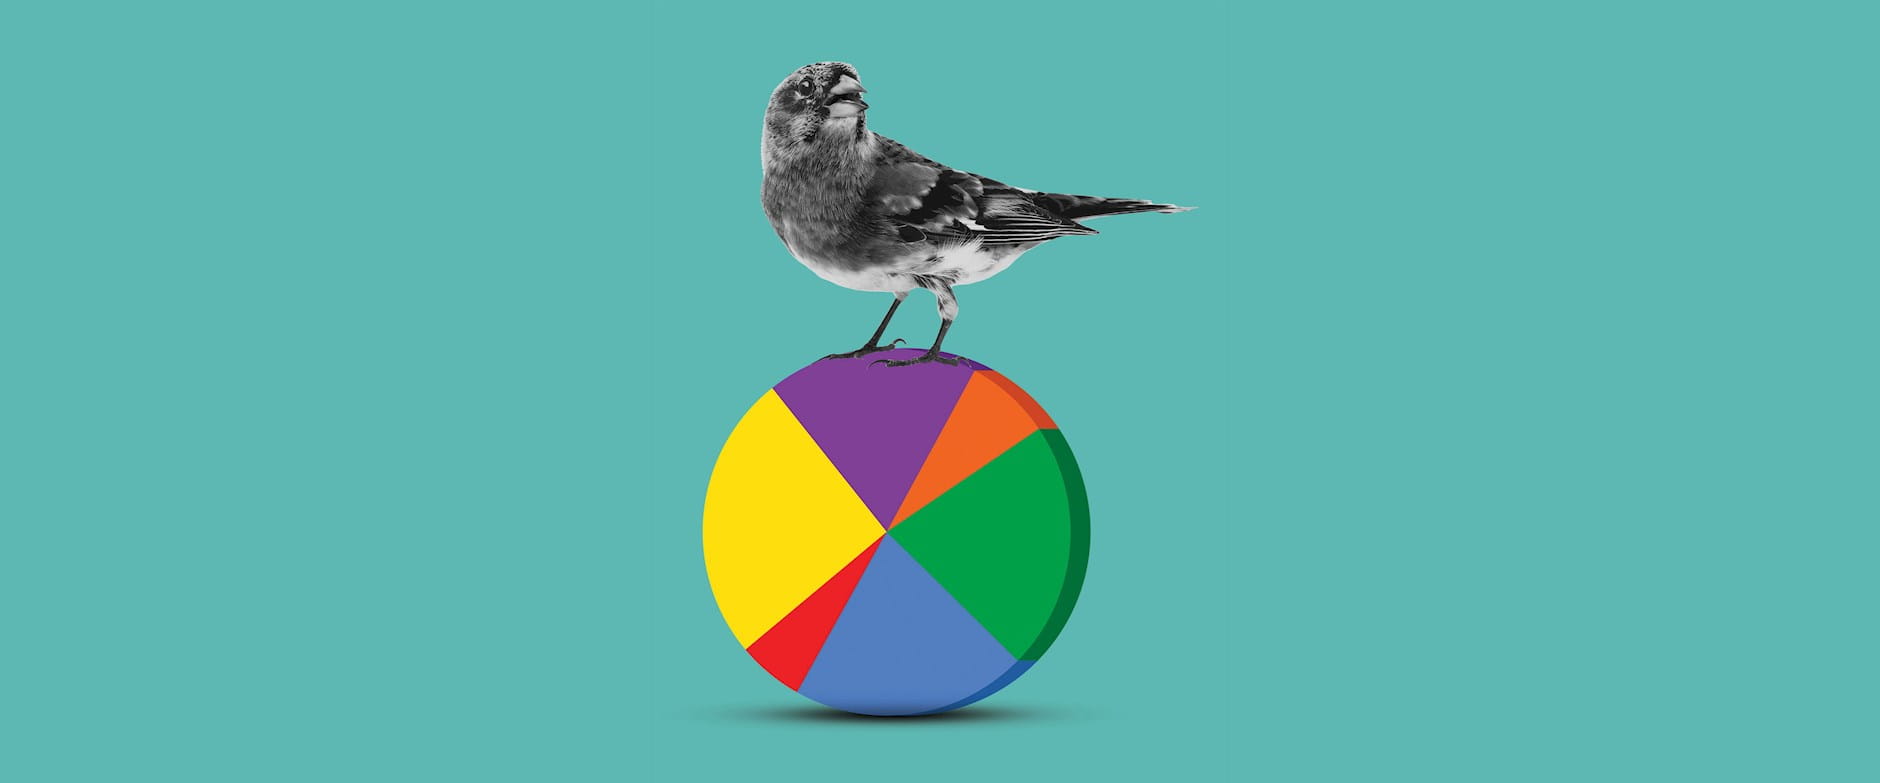 Small bird standing on a pie chart